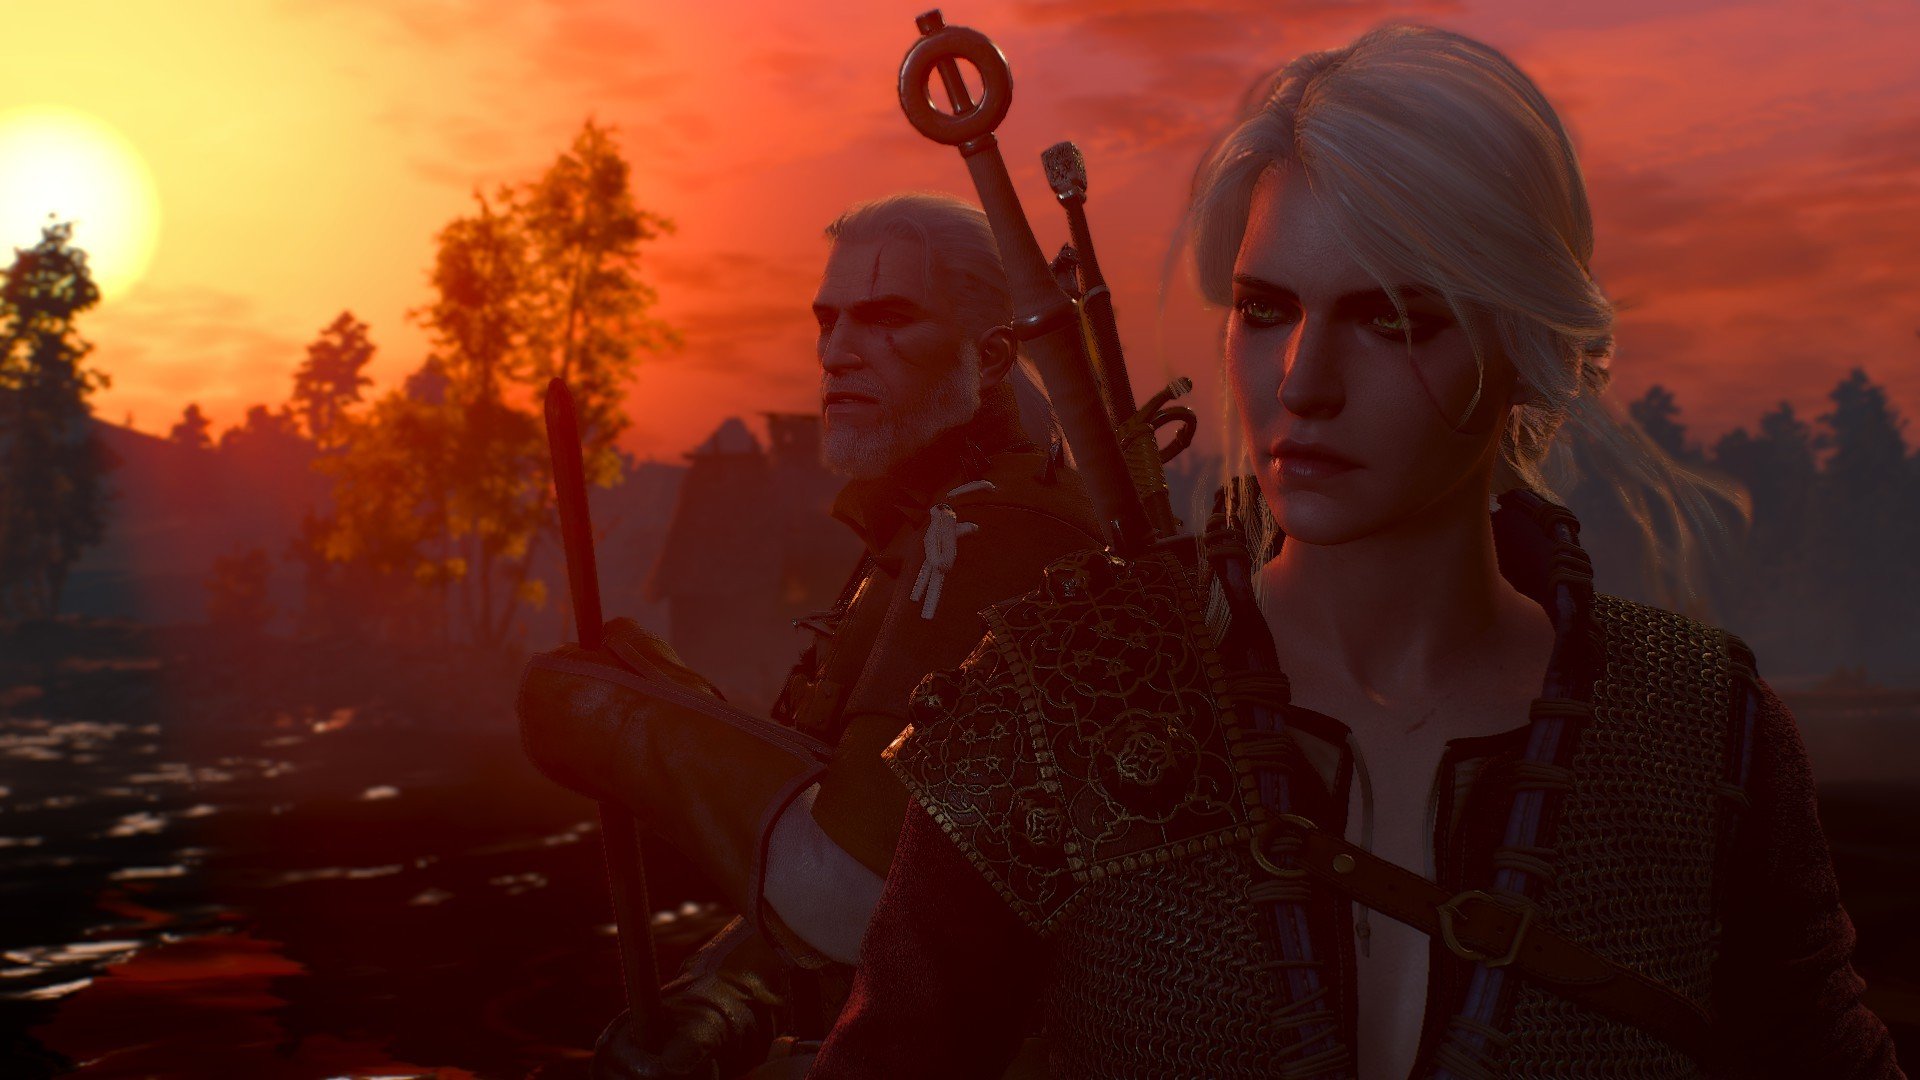 Geralt of Rivia, Cirilla Fiona Elen Riannon, The Witcher 3: Wild Hunt Wallpaper